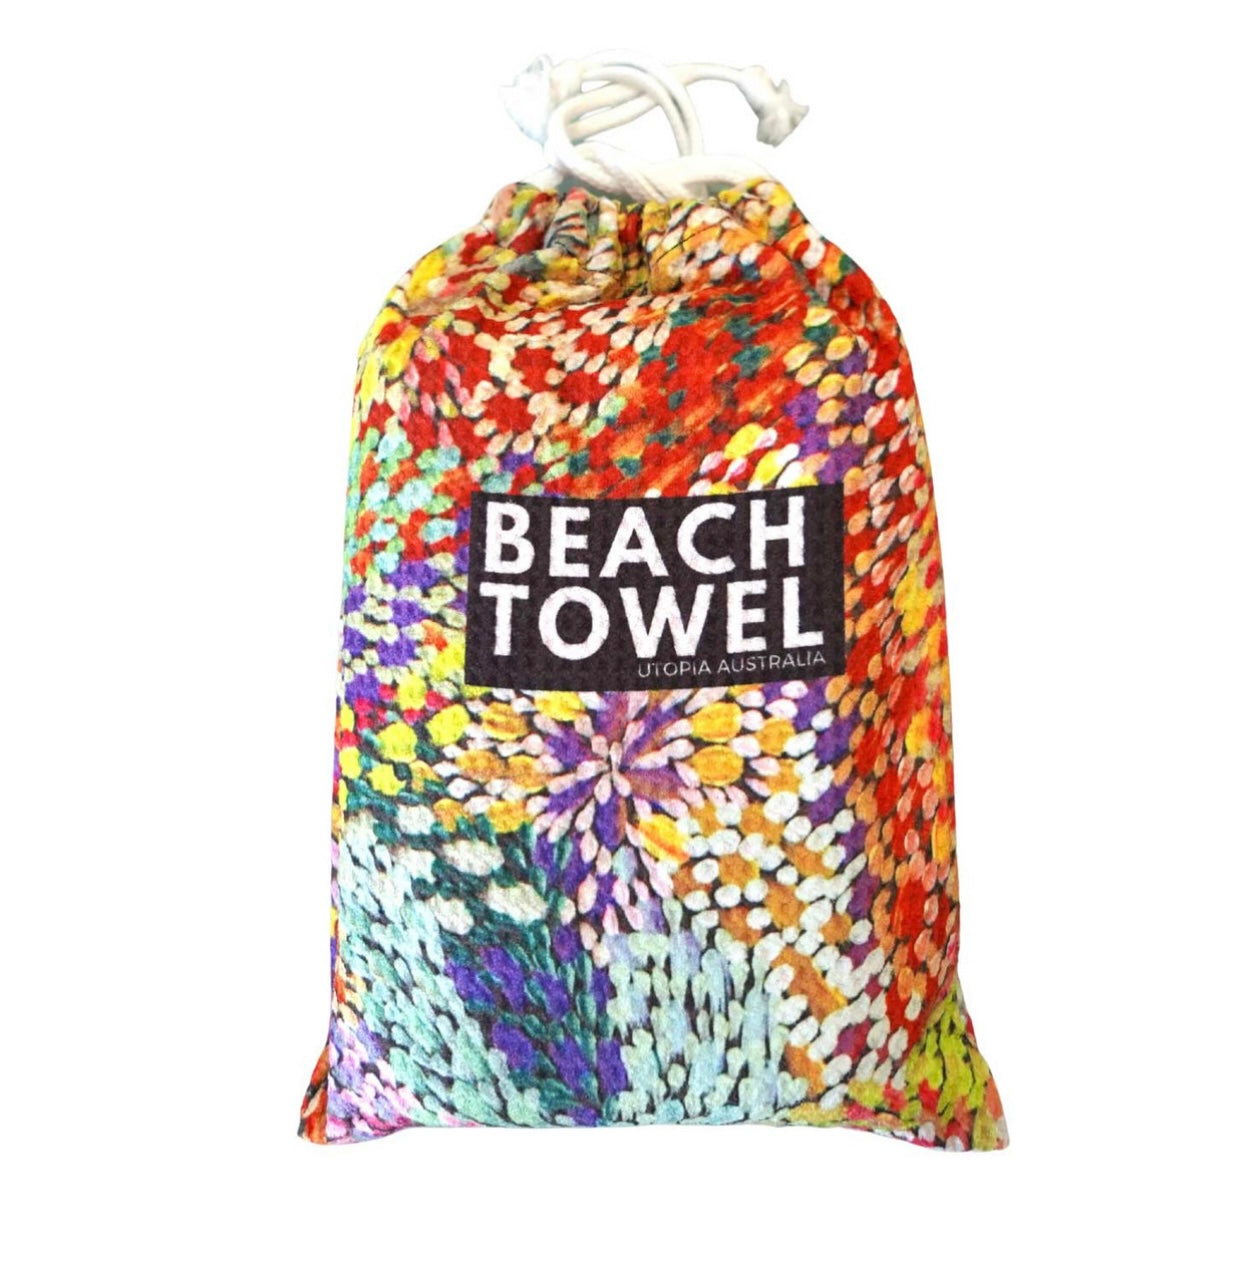 Beach Towel - Janelle Stockman